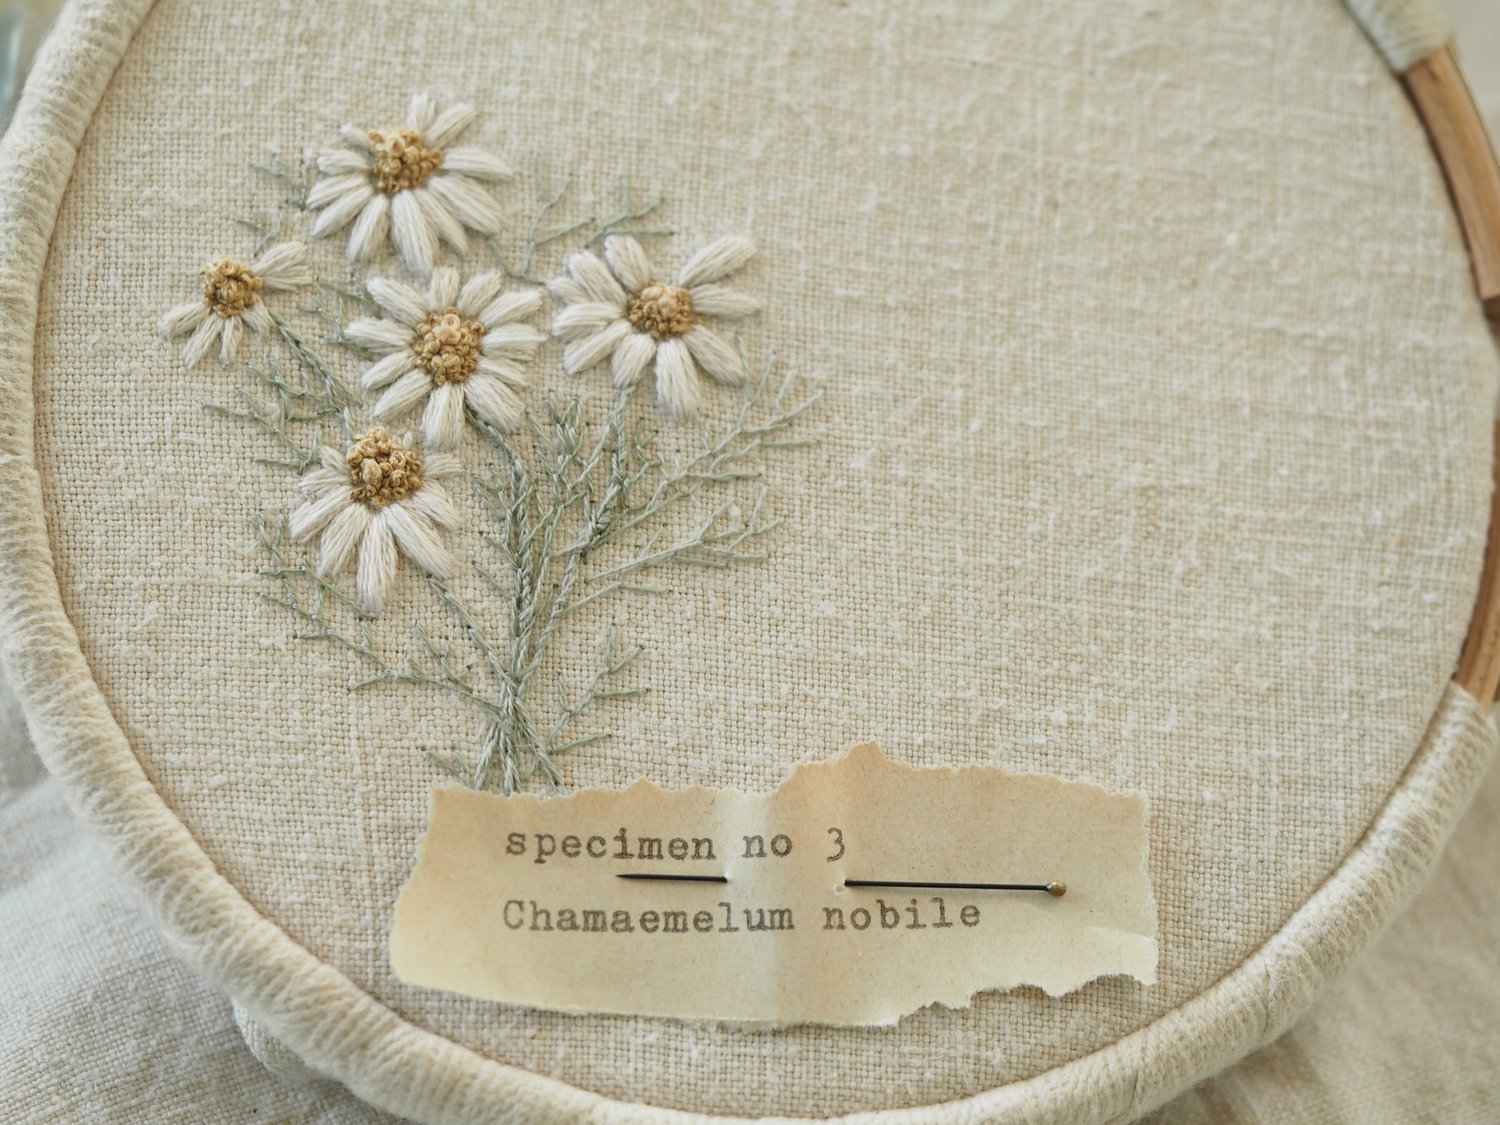 The Stitchery Embroidery Kit: Anniversary Stitch Sampler - Willow